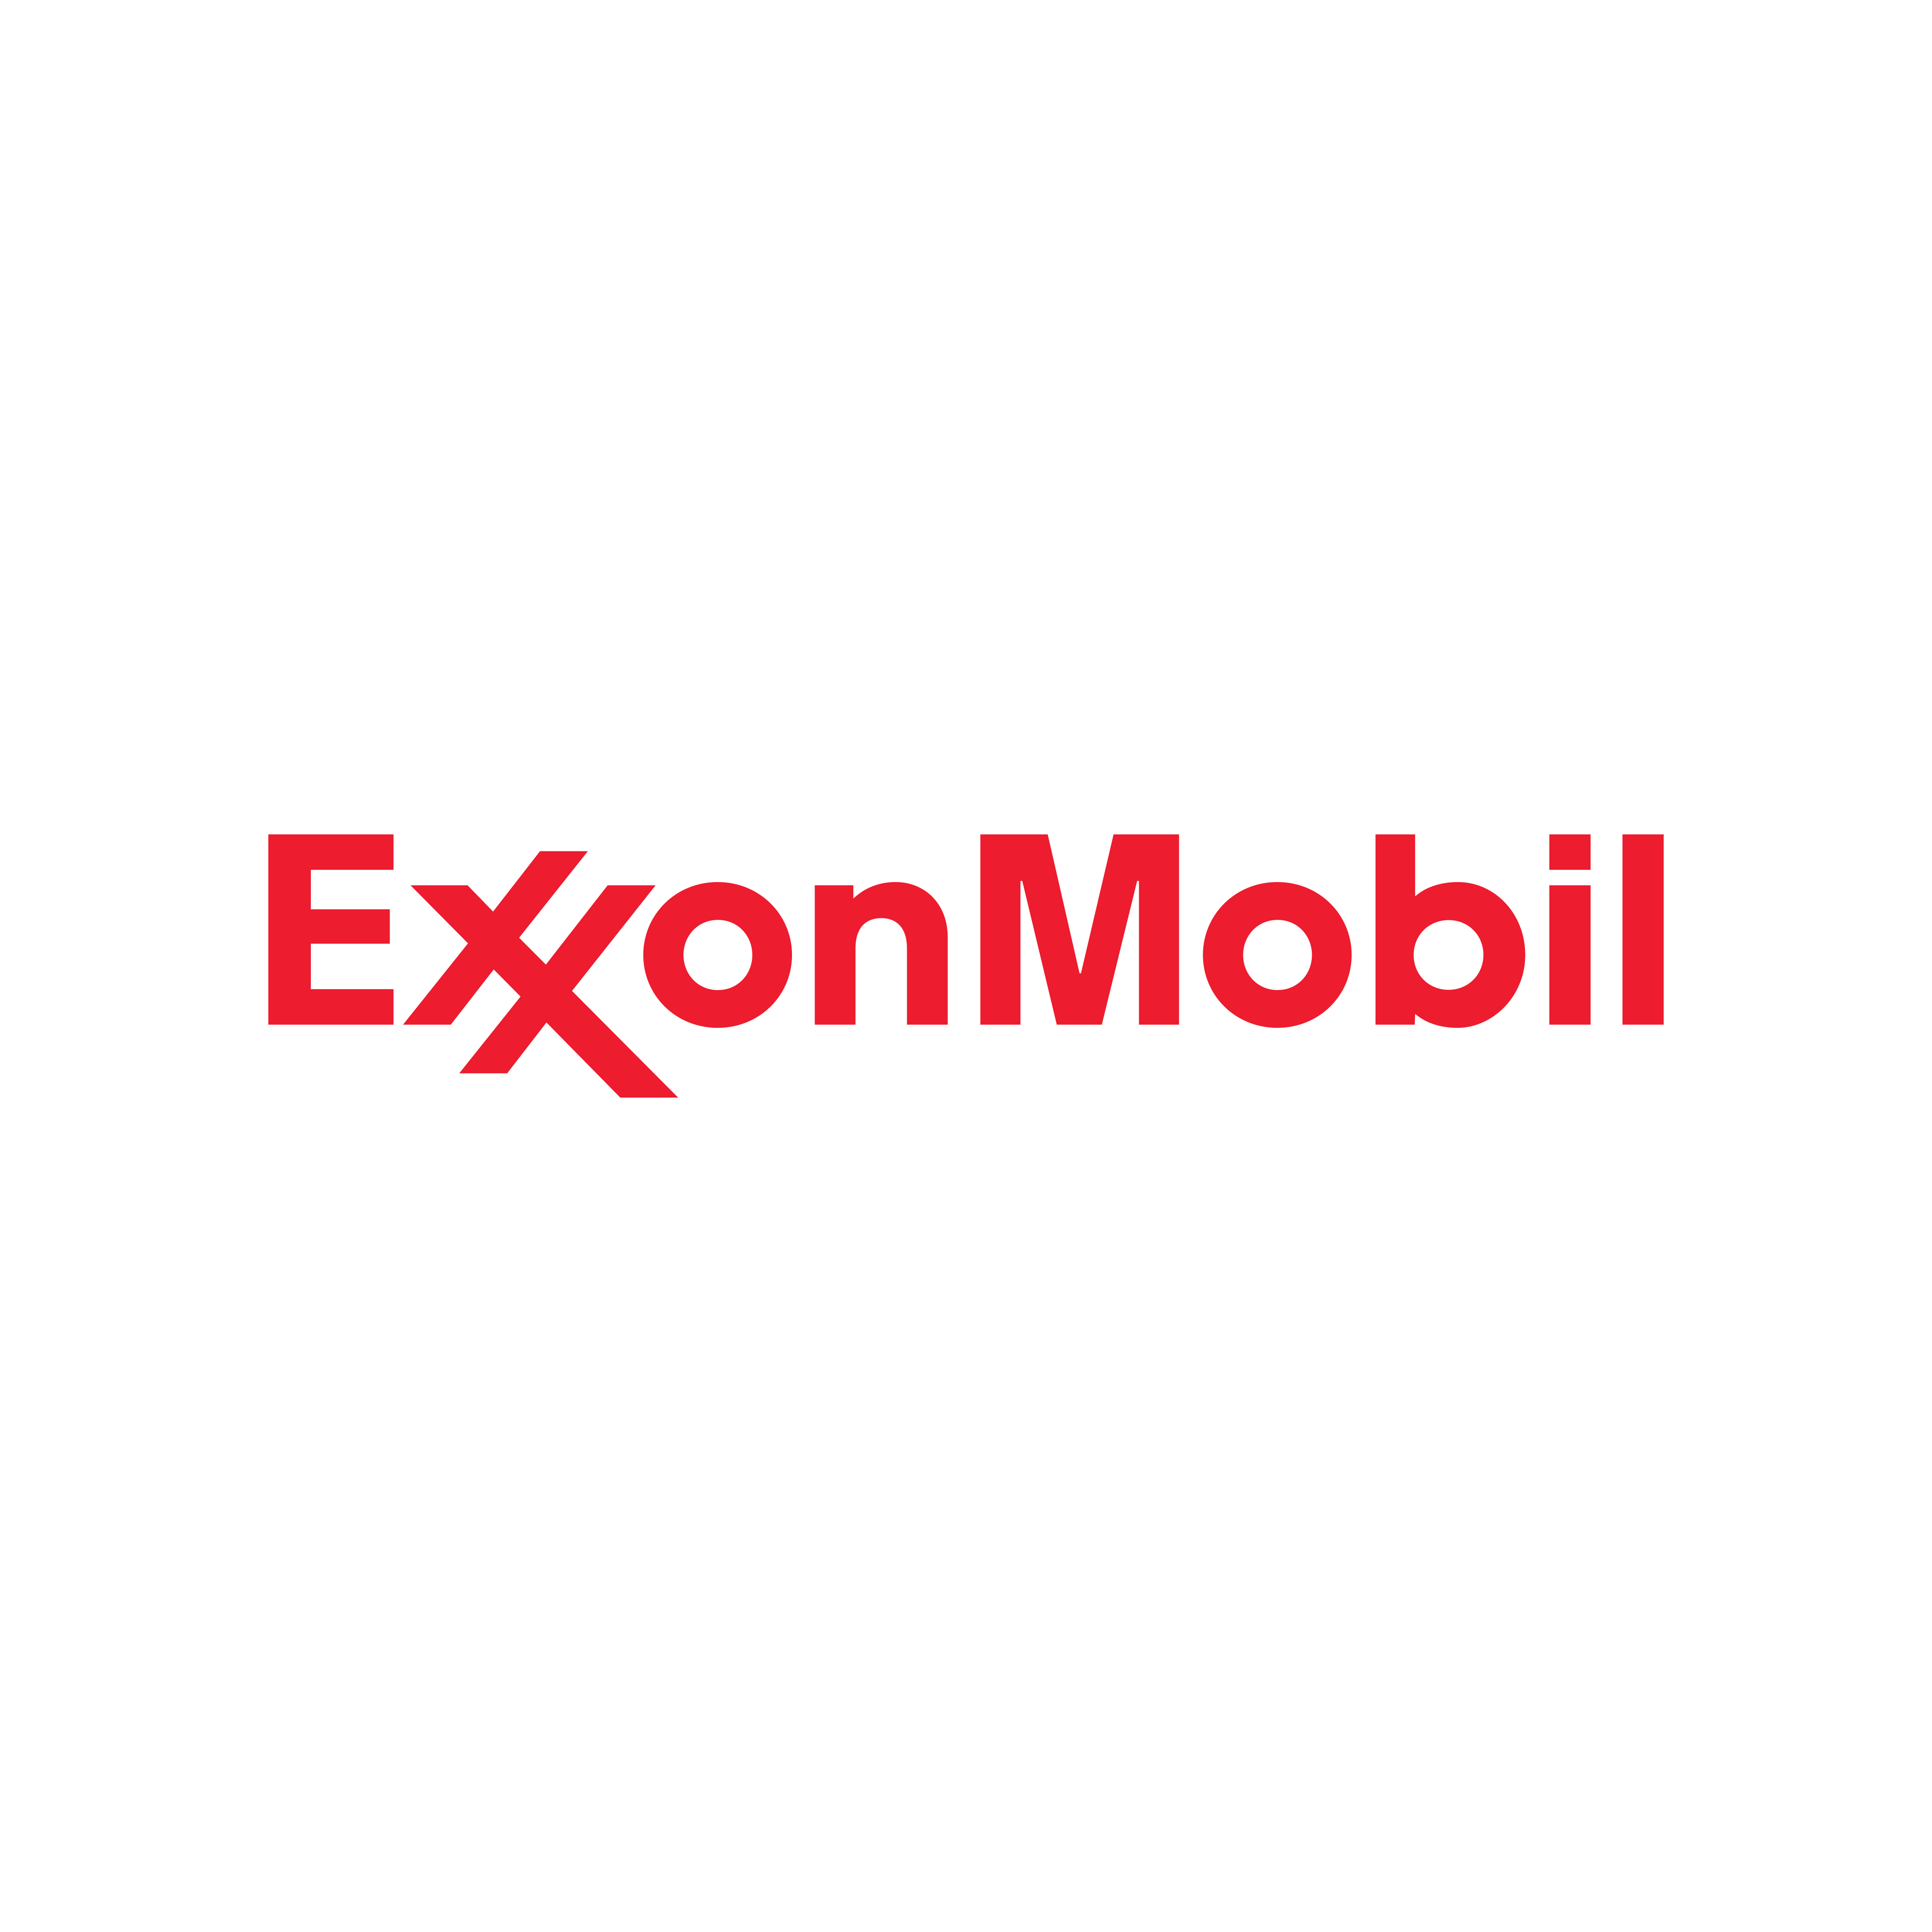 exxonmobil logo 0.svg  - ExxonMobil logo